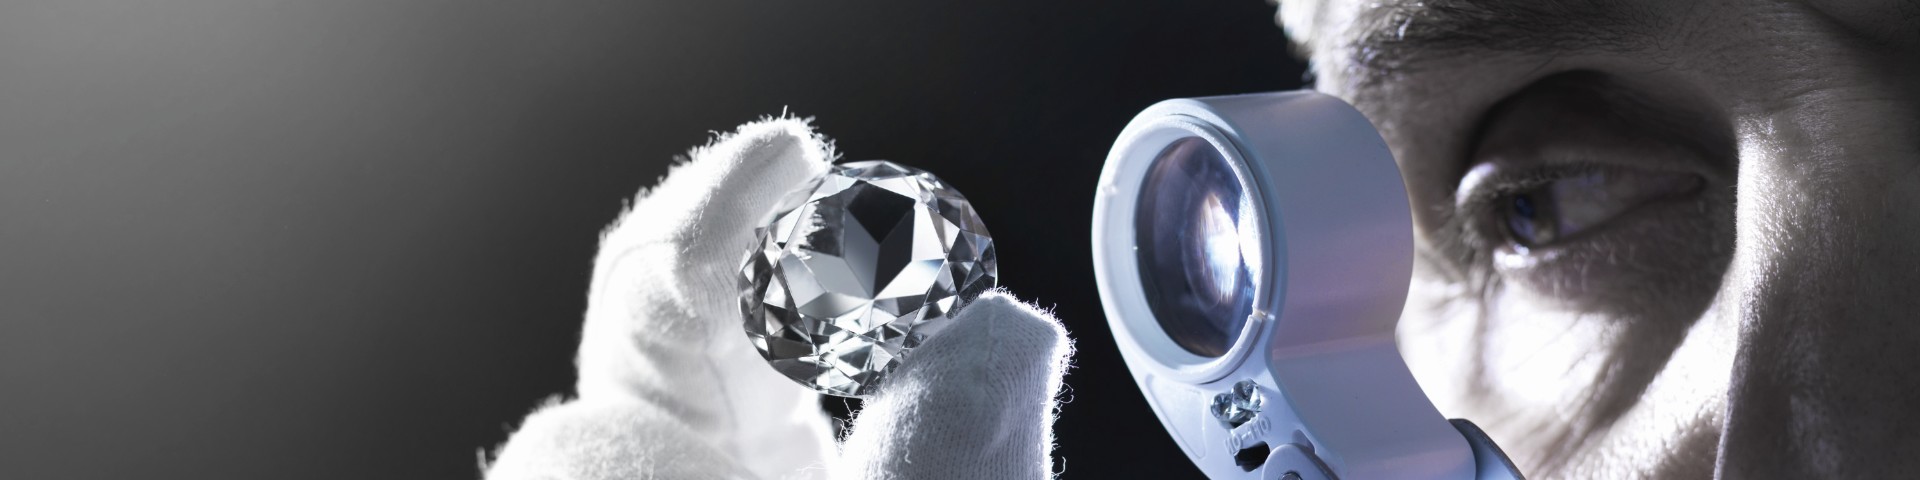 Experte prüft Diamanten mit Lupe